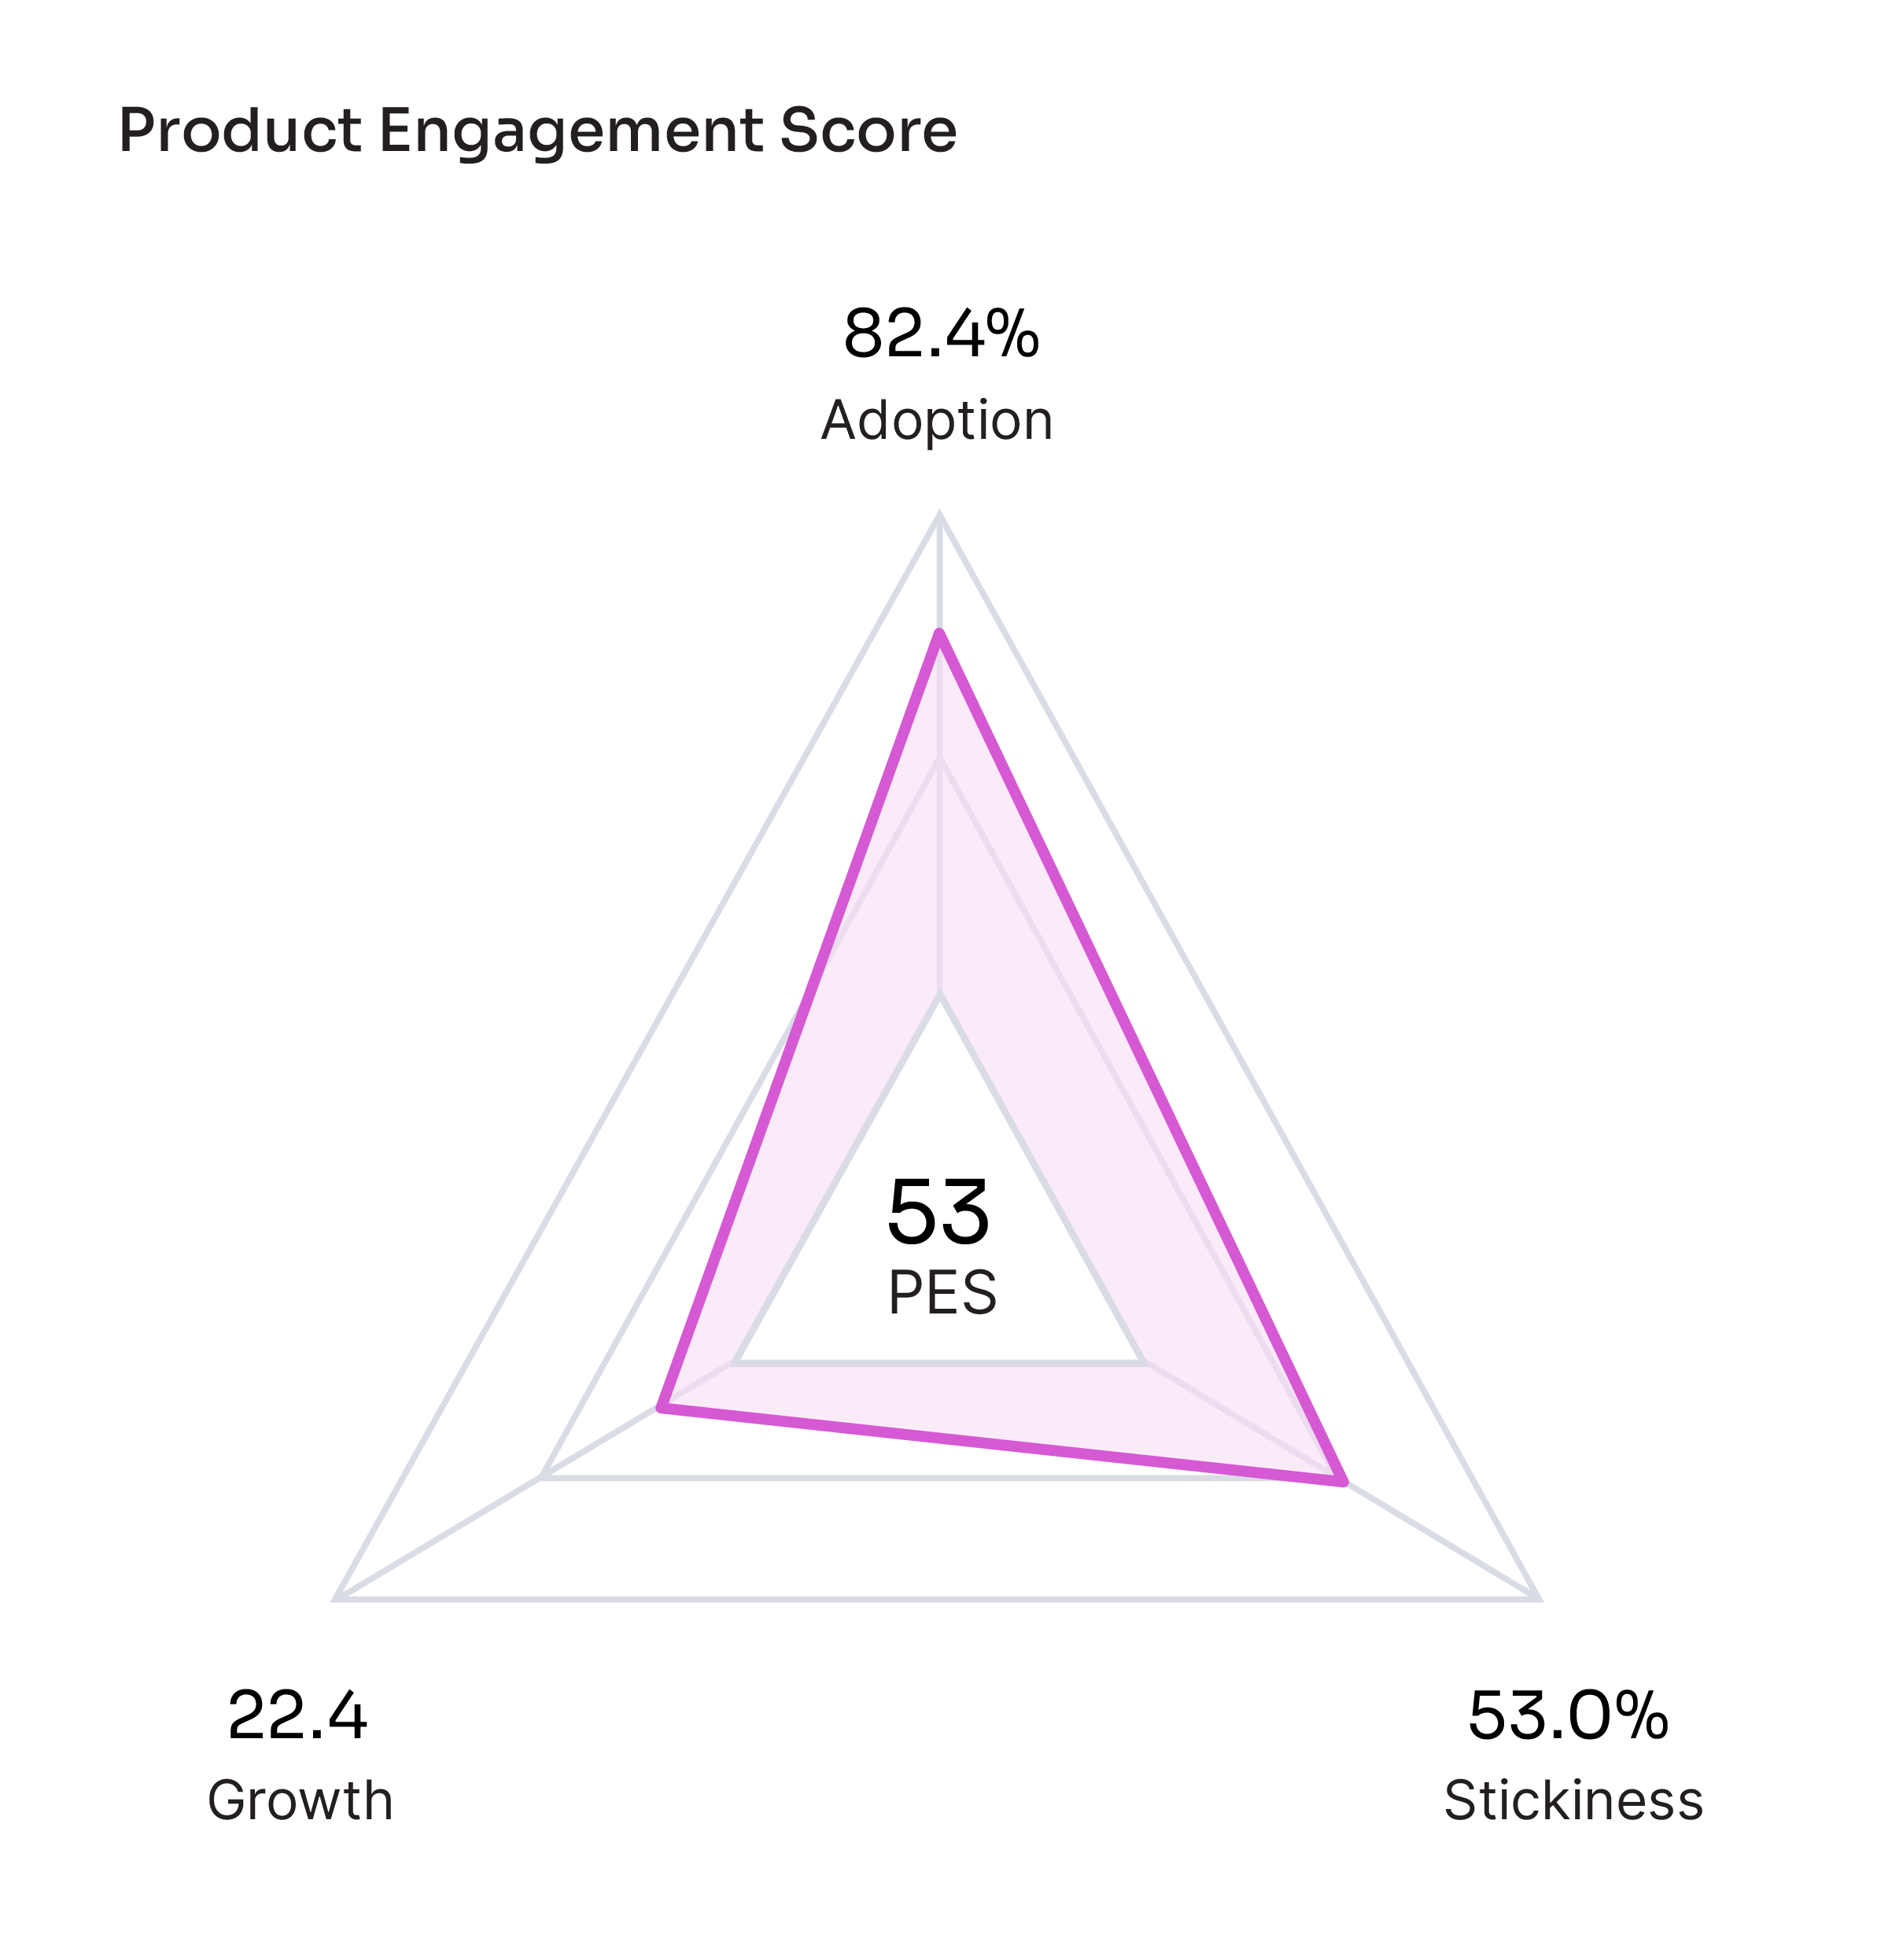 Product engagement score